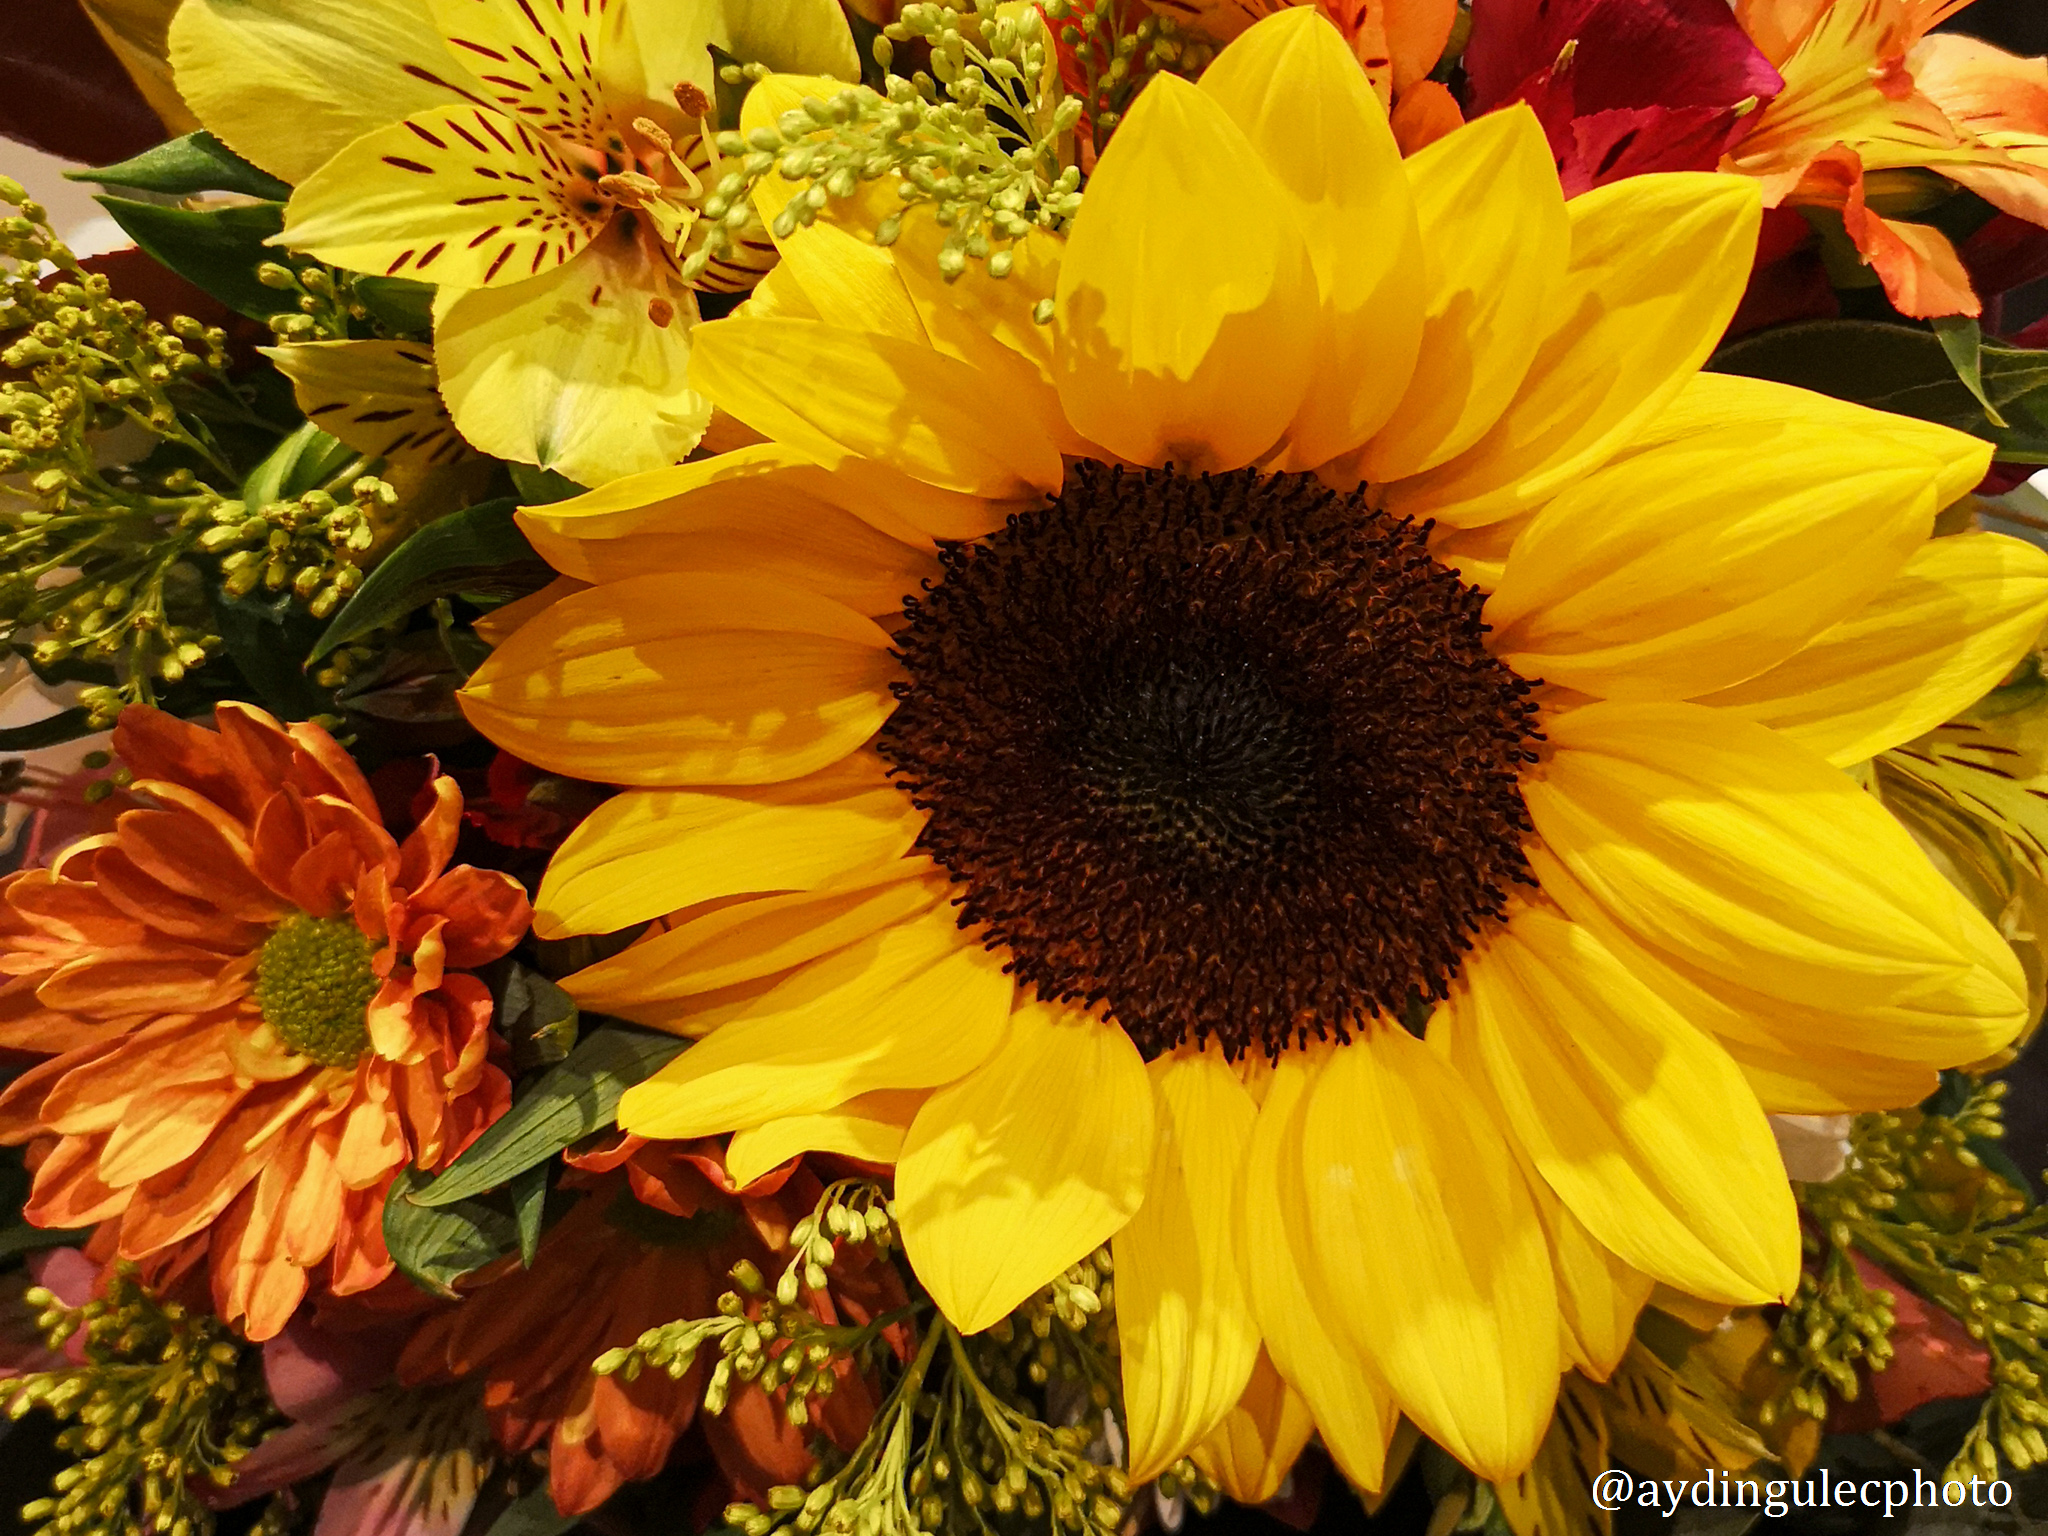 Aydin Gulec: Sunflower in Bouquet